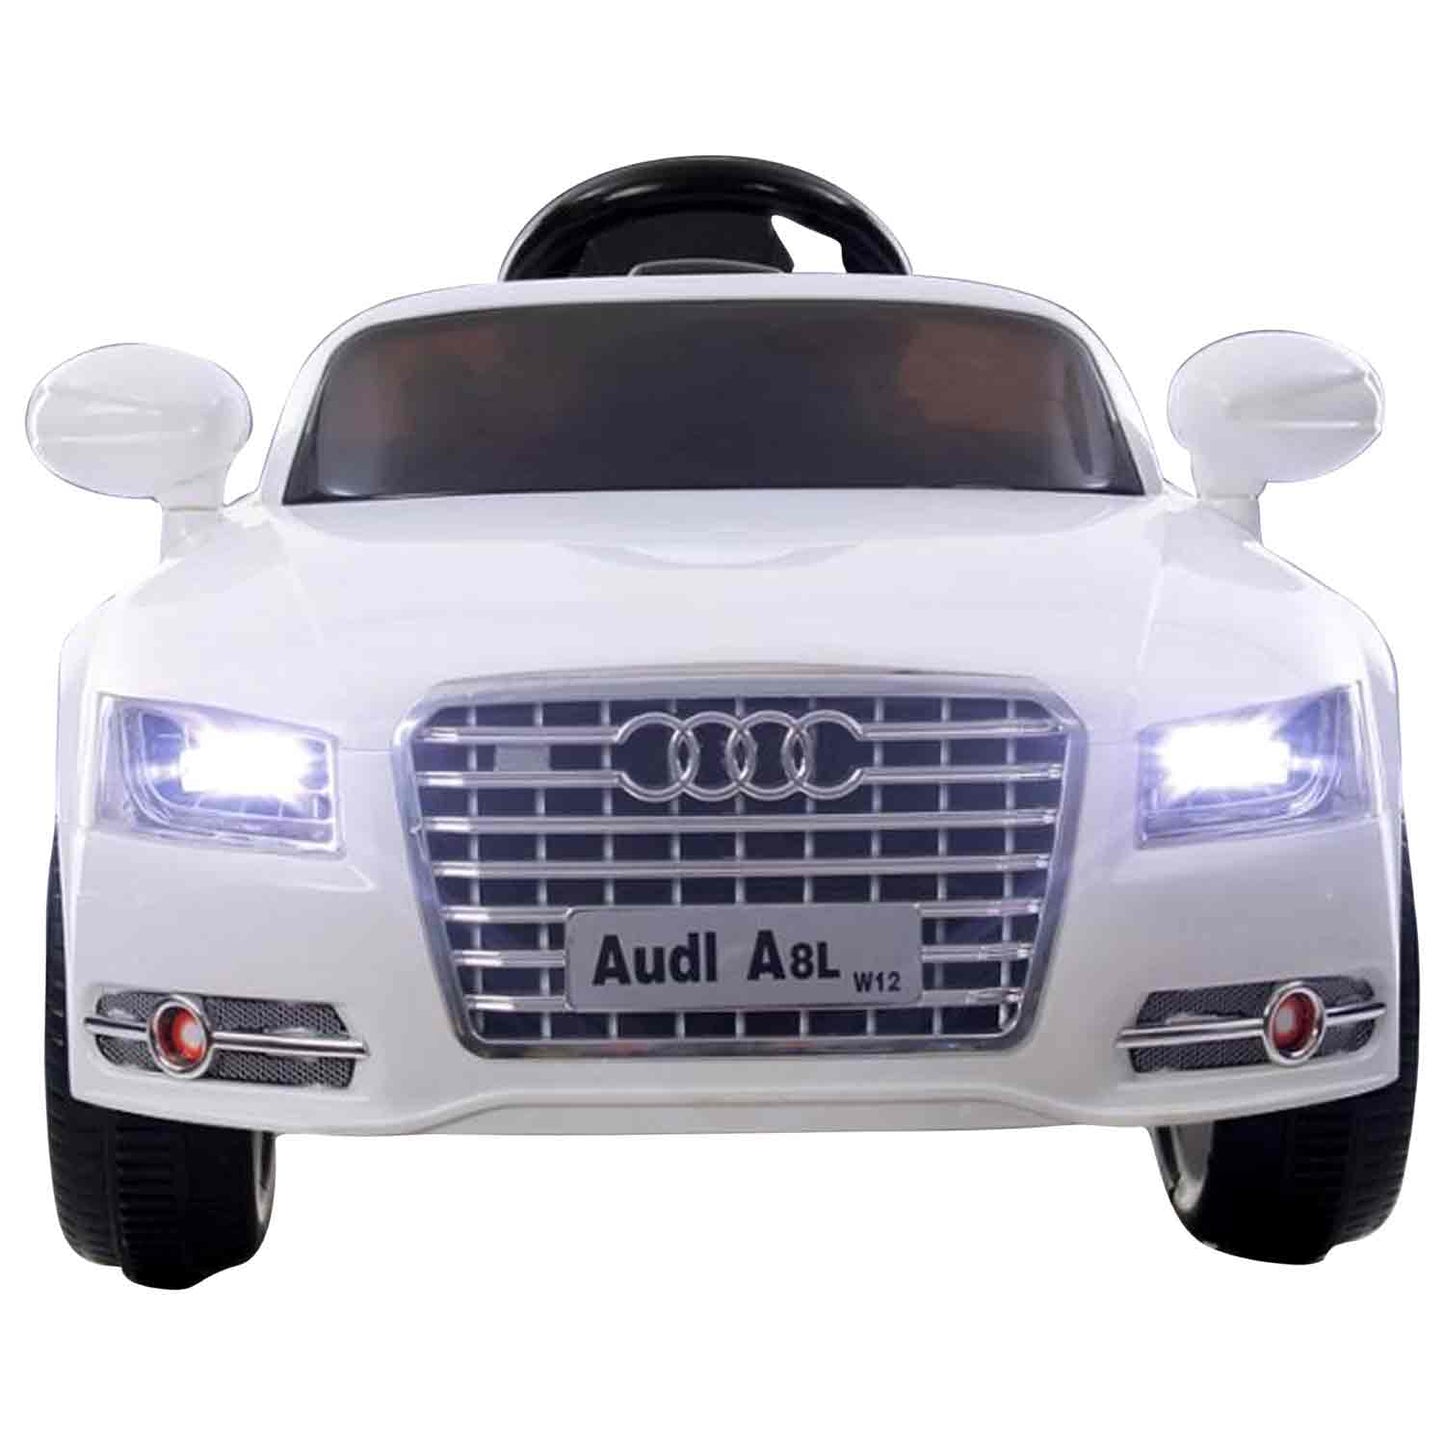 Audi A8L Toy Car